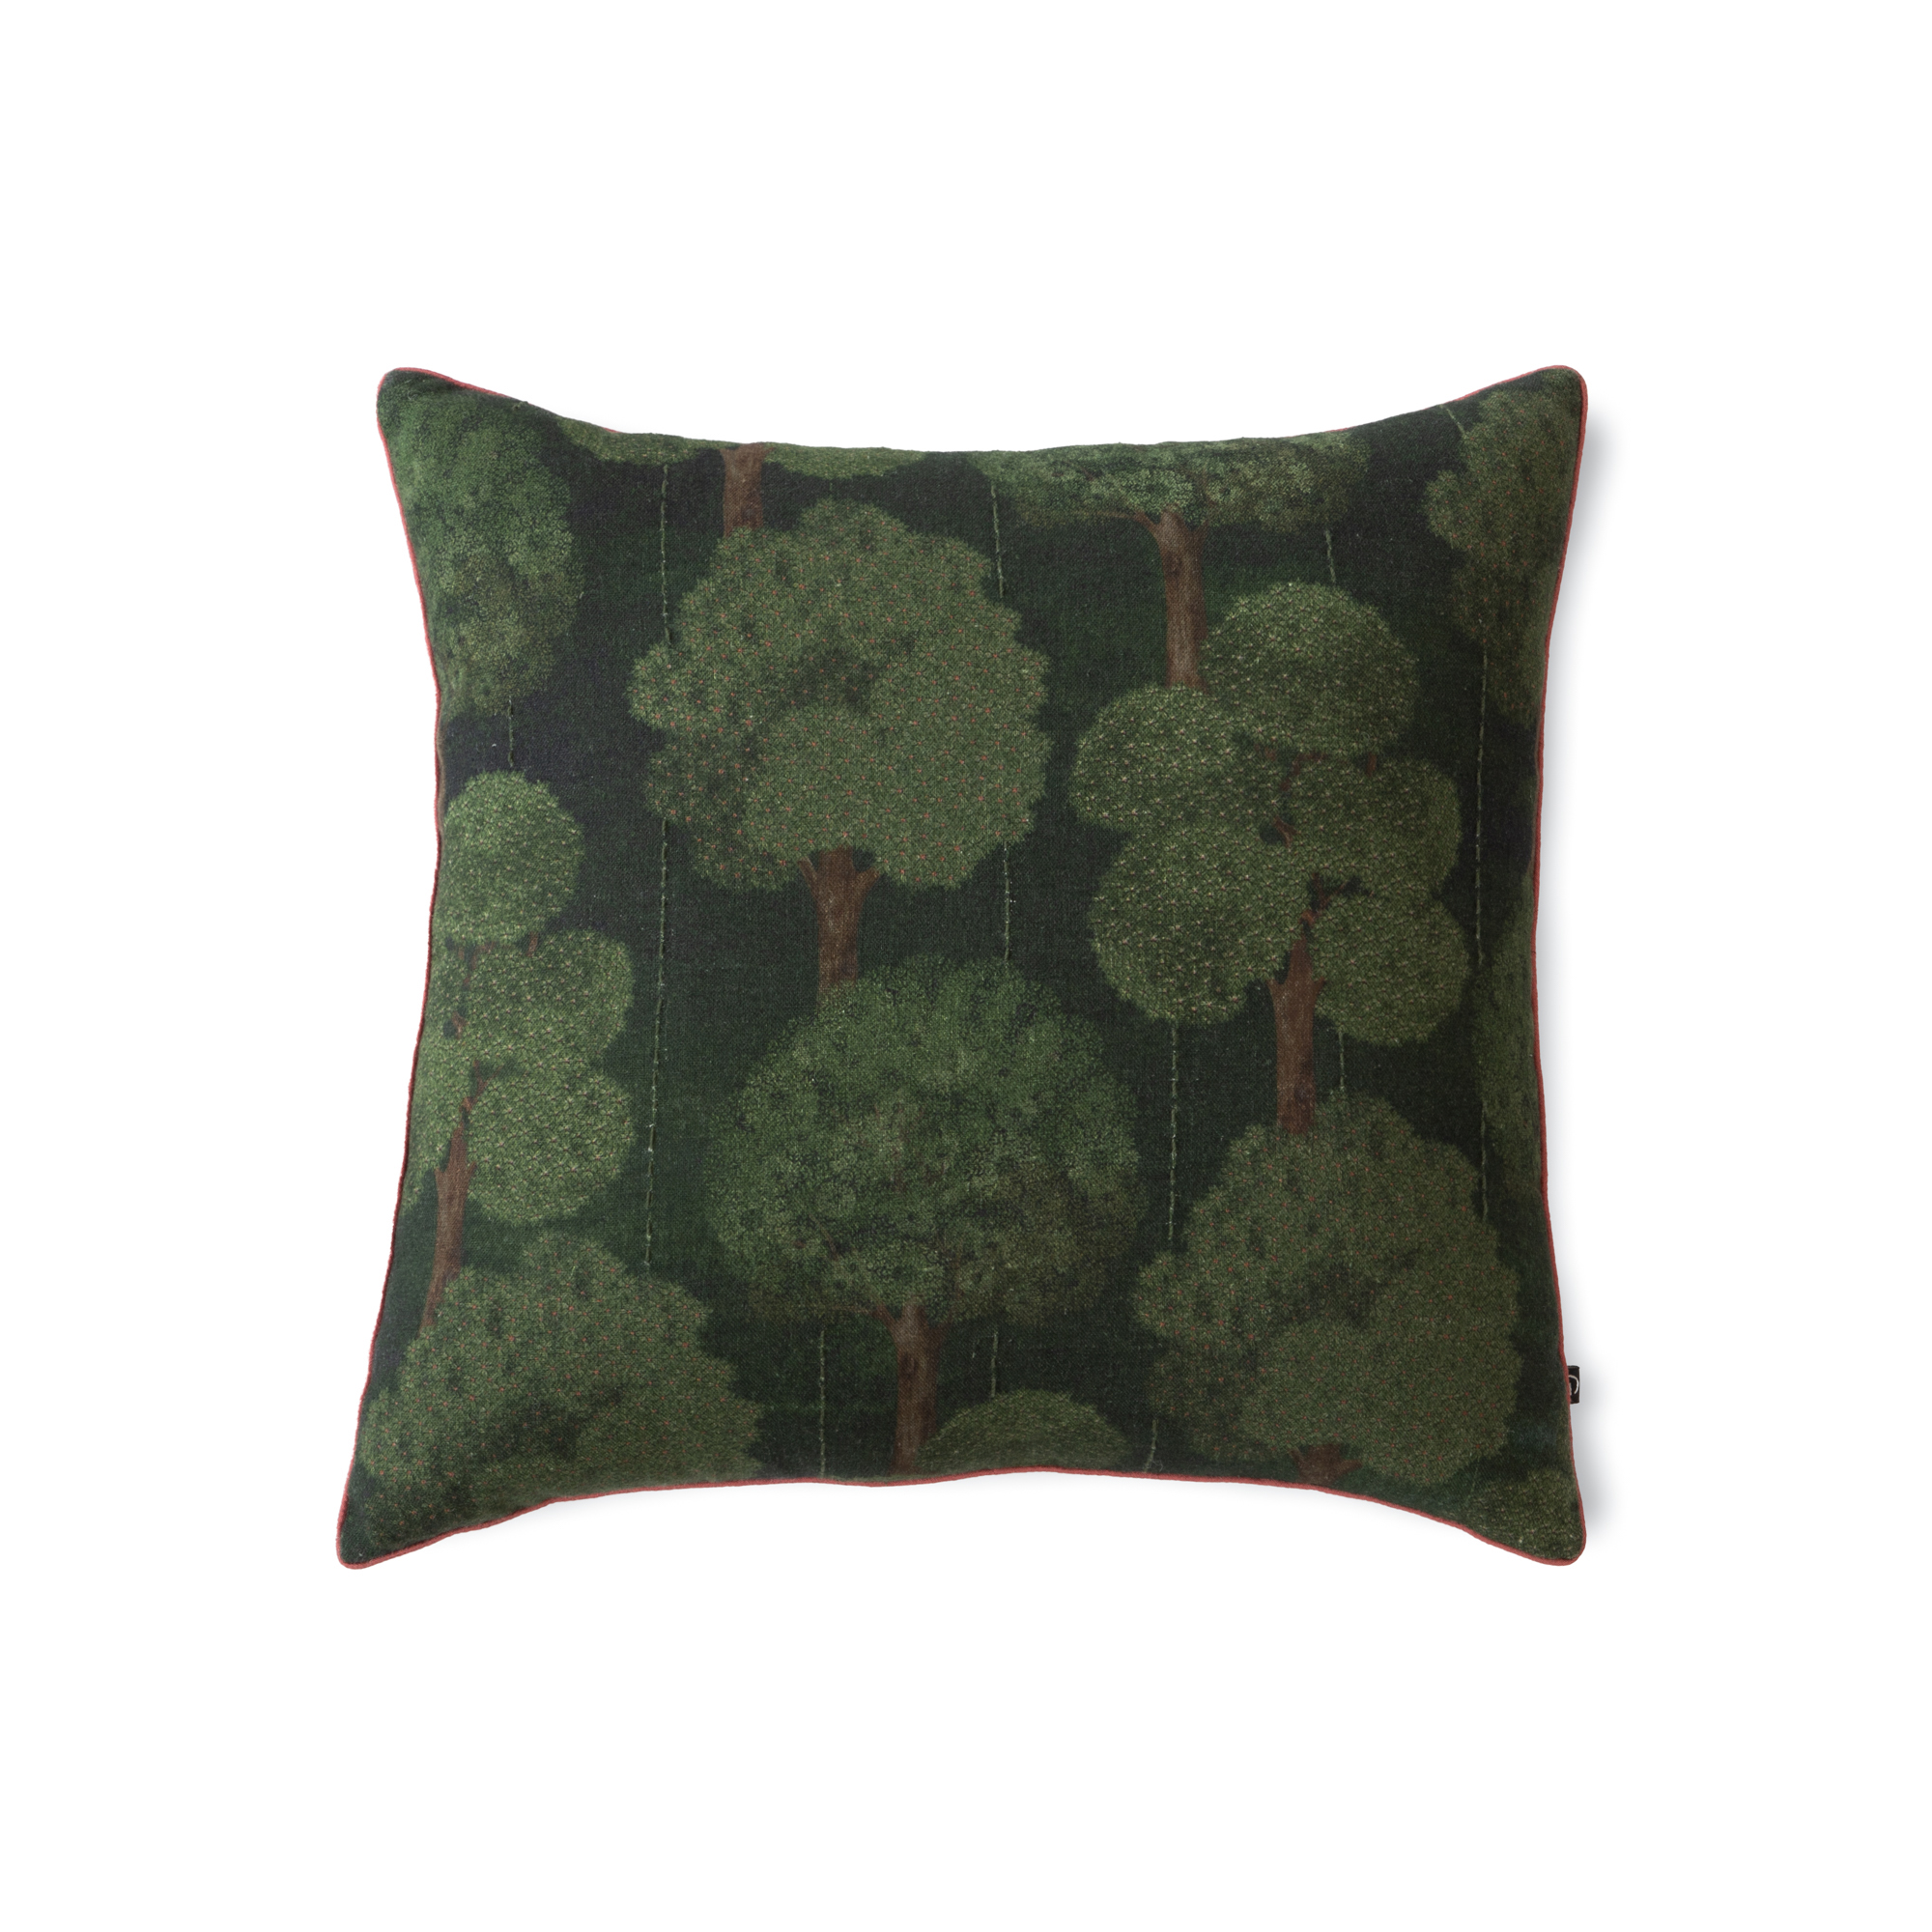 The Sacred Groves Cushion Cover